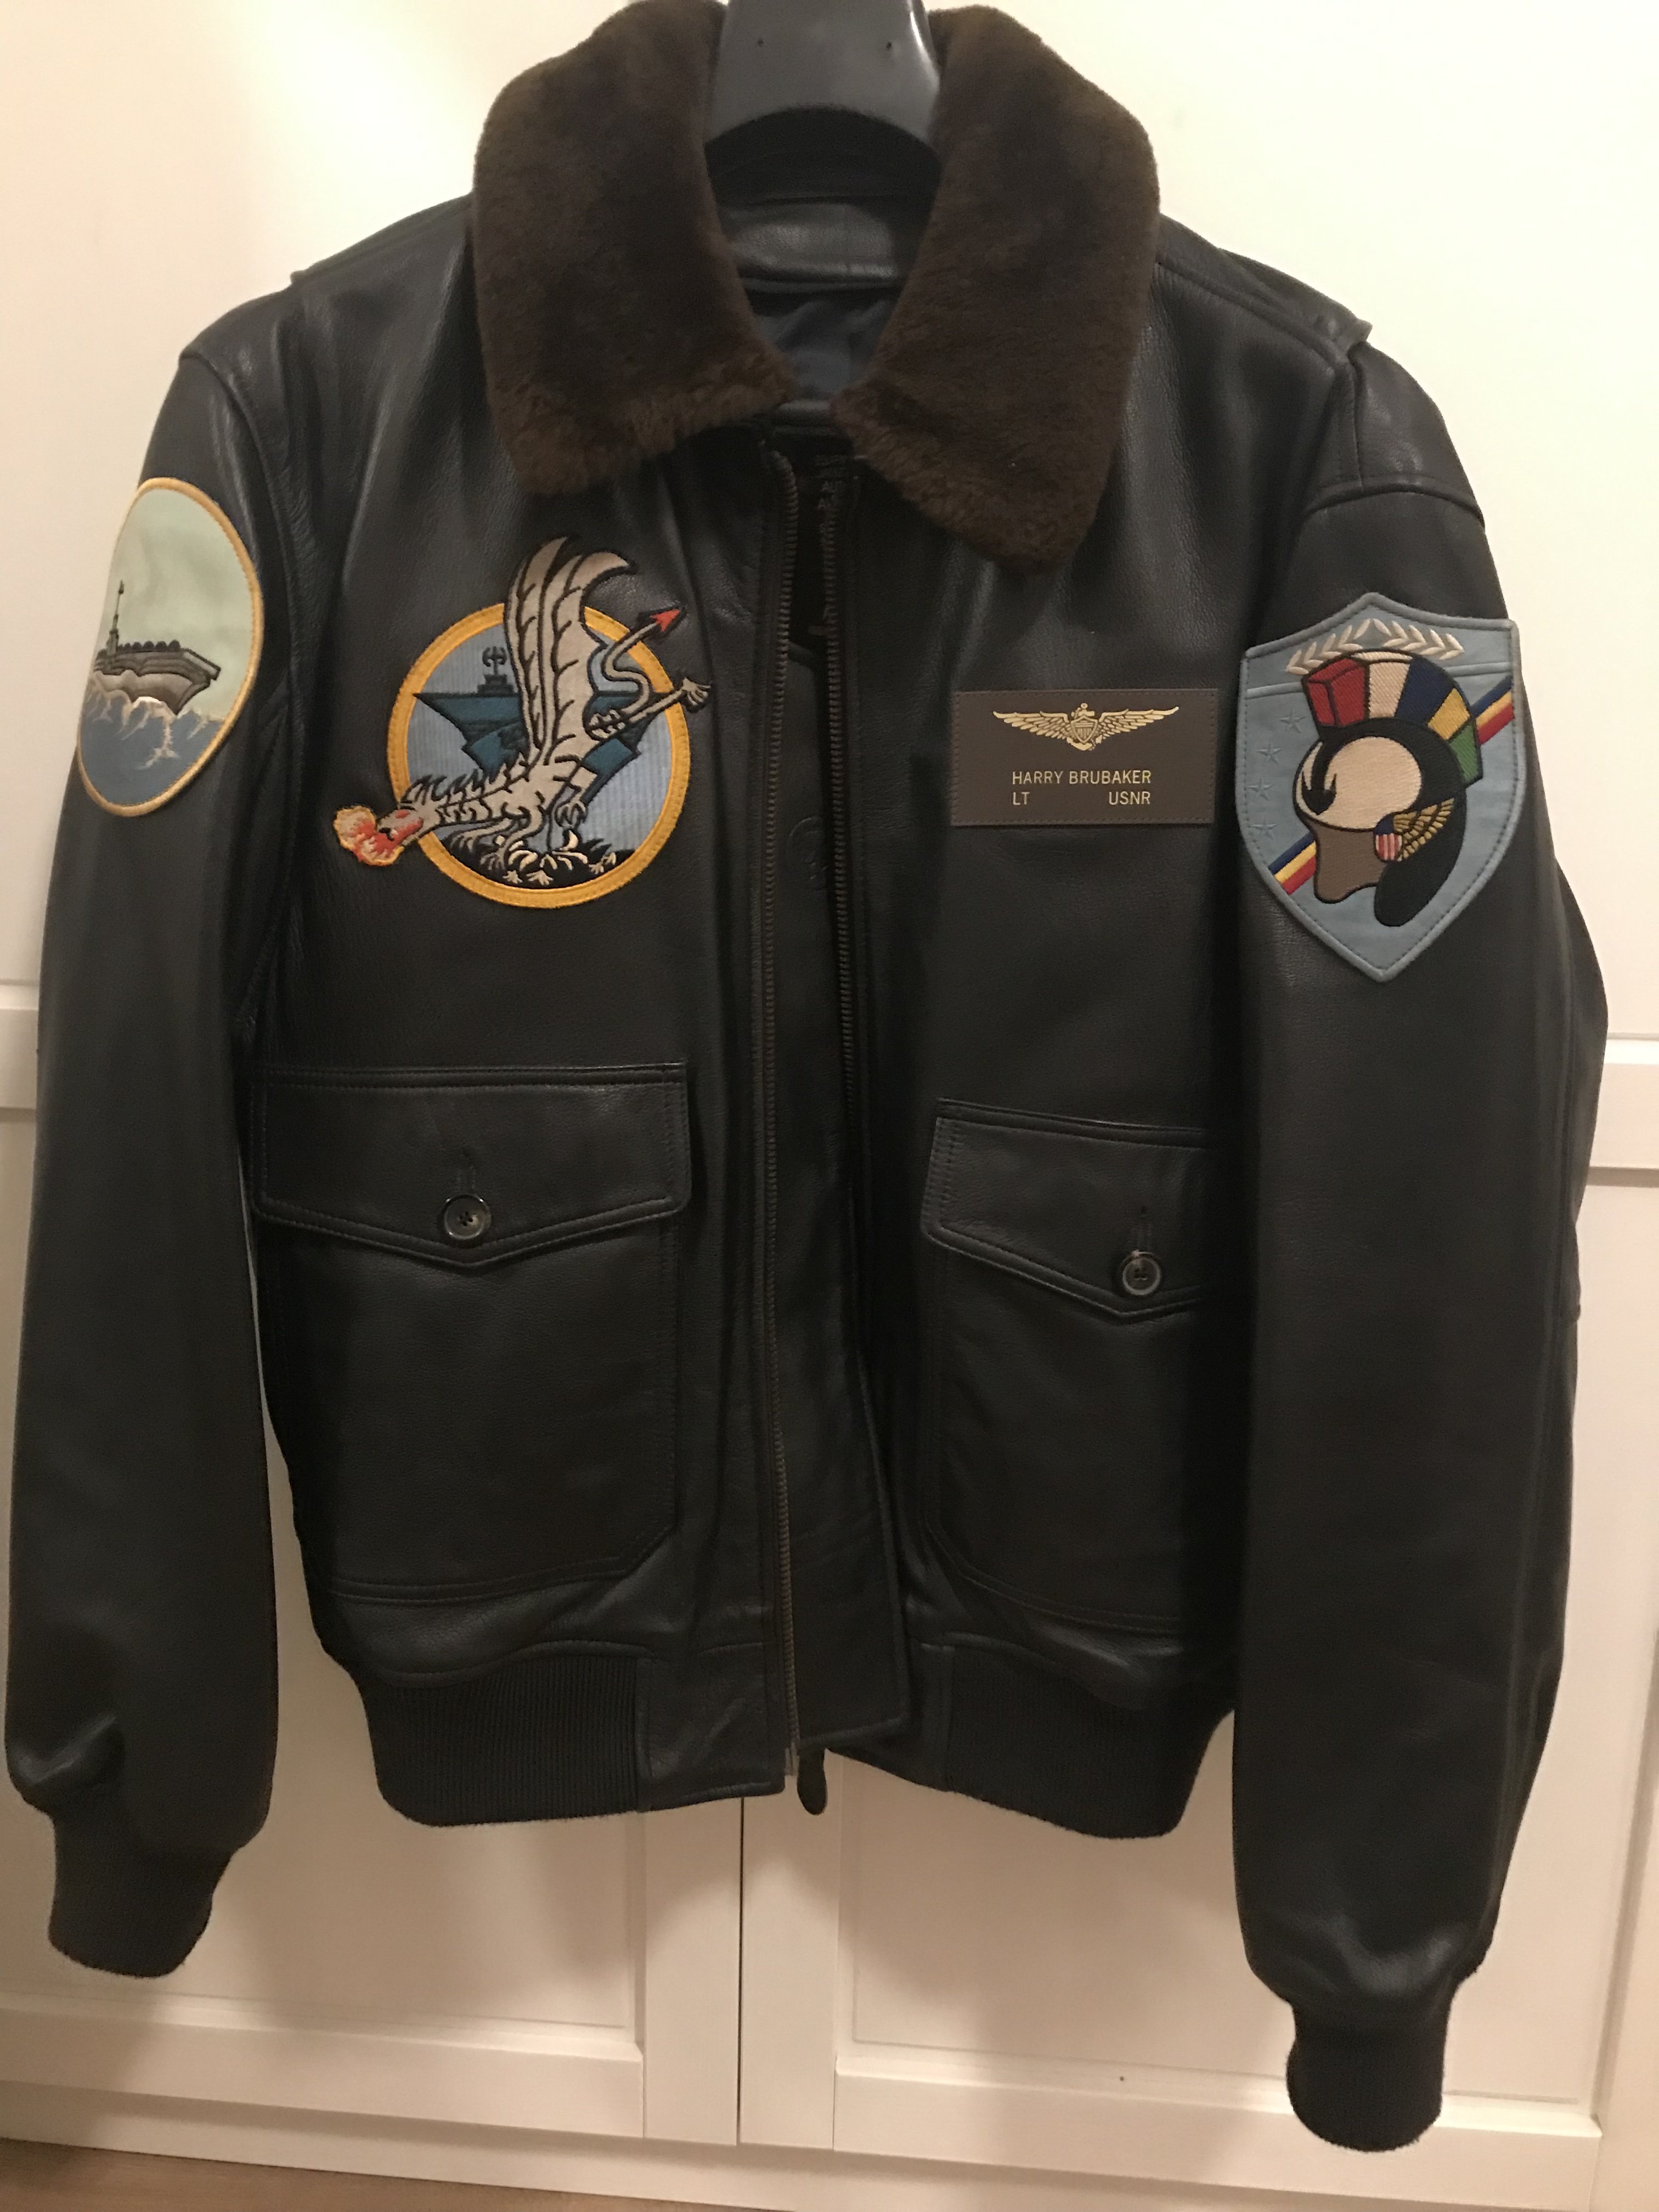 Toko Ri G1 wip | Vintage Leather Jackets Forum